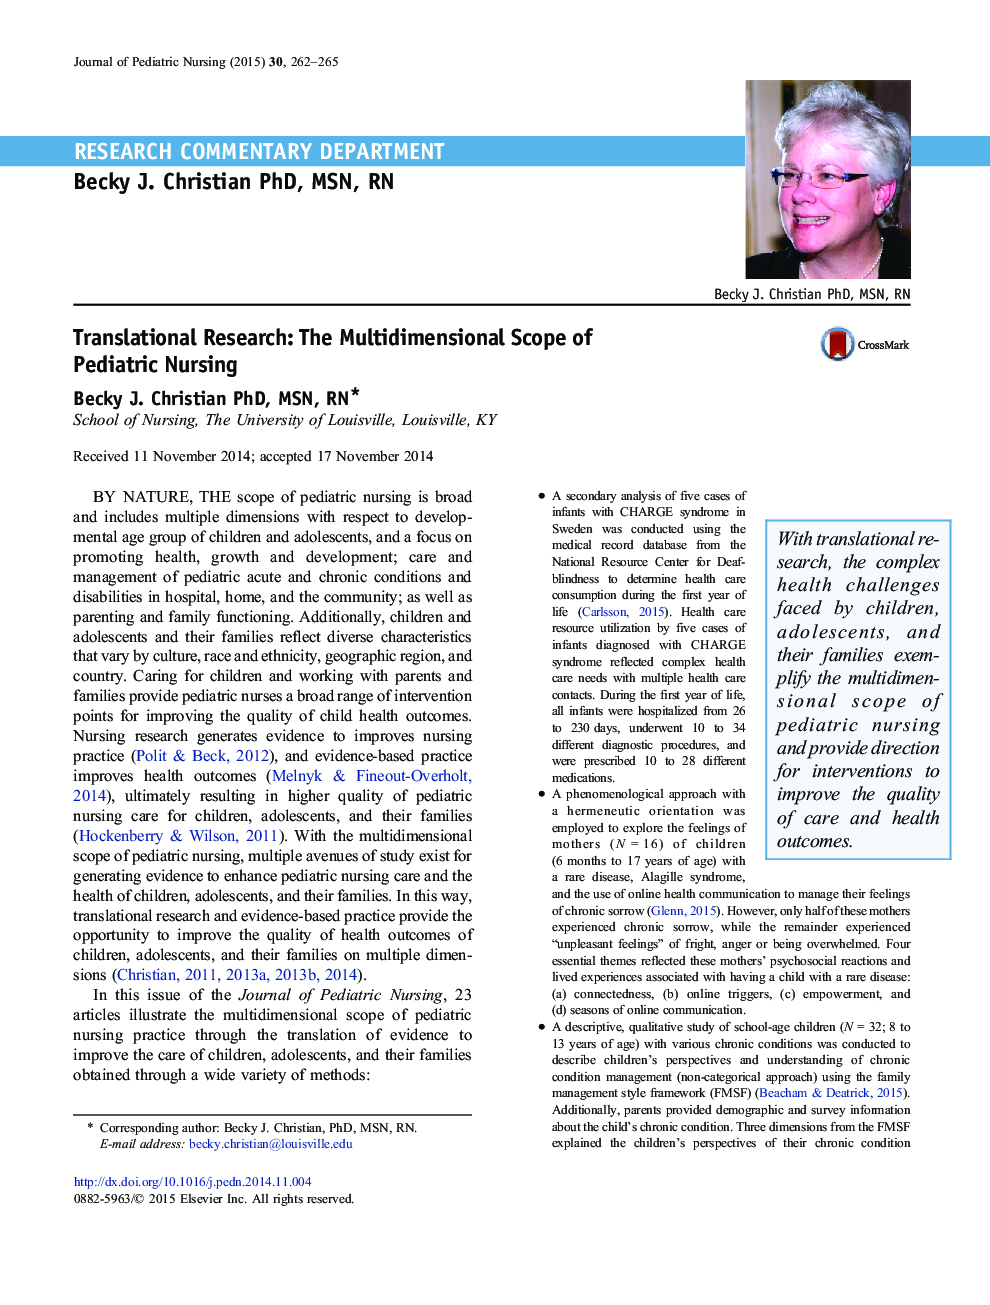 Translational Research: The Multidimensional Scope of Pediatric Nursing